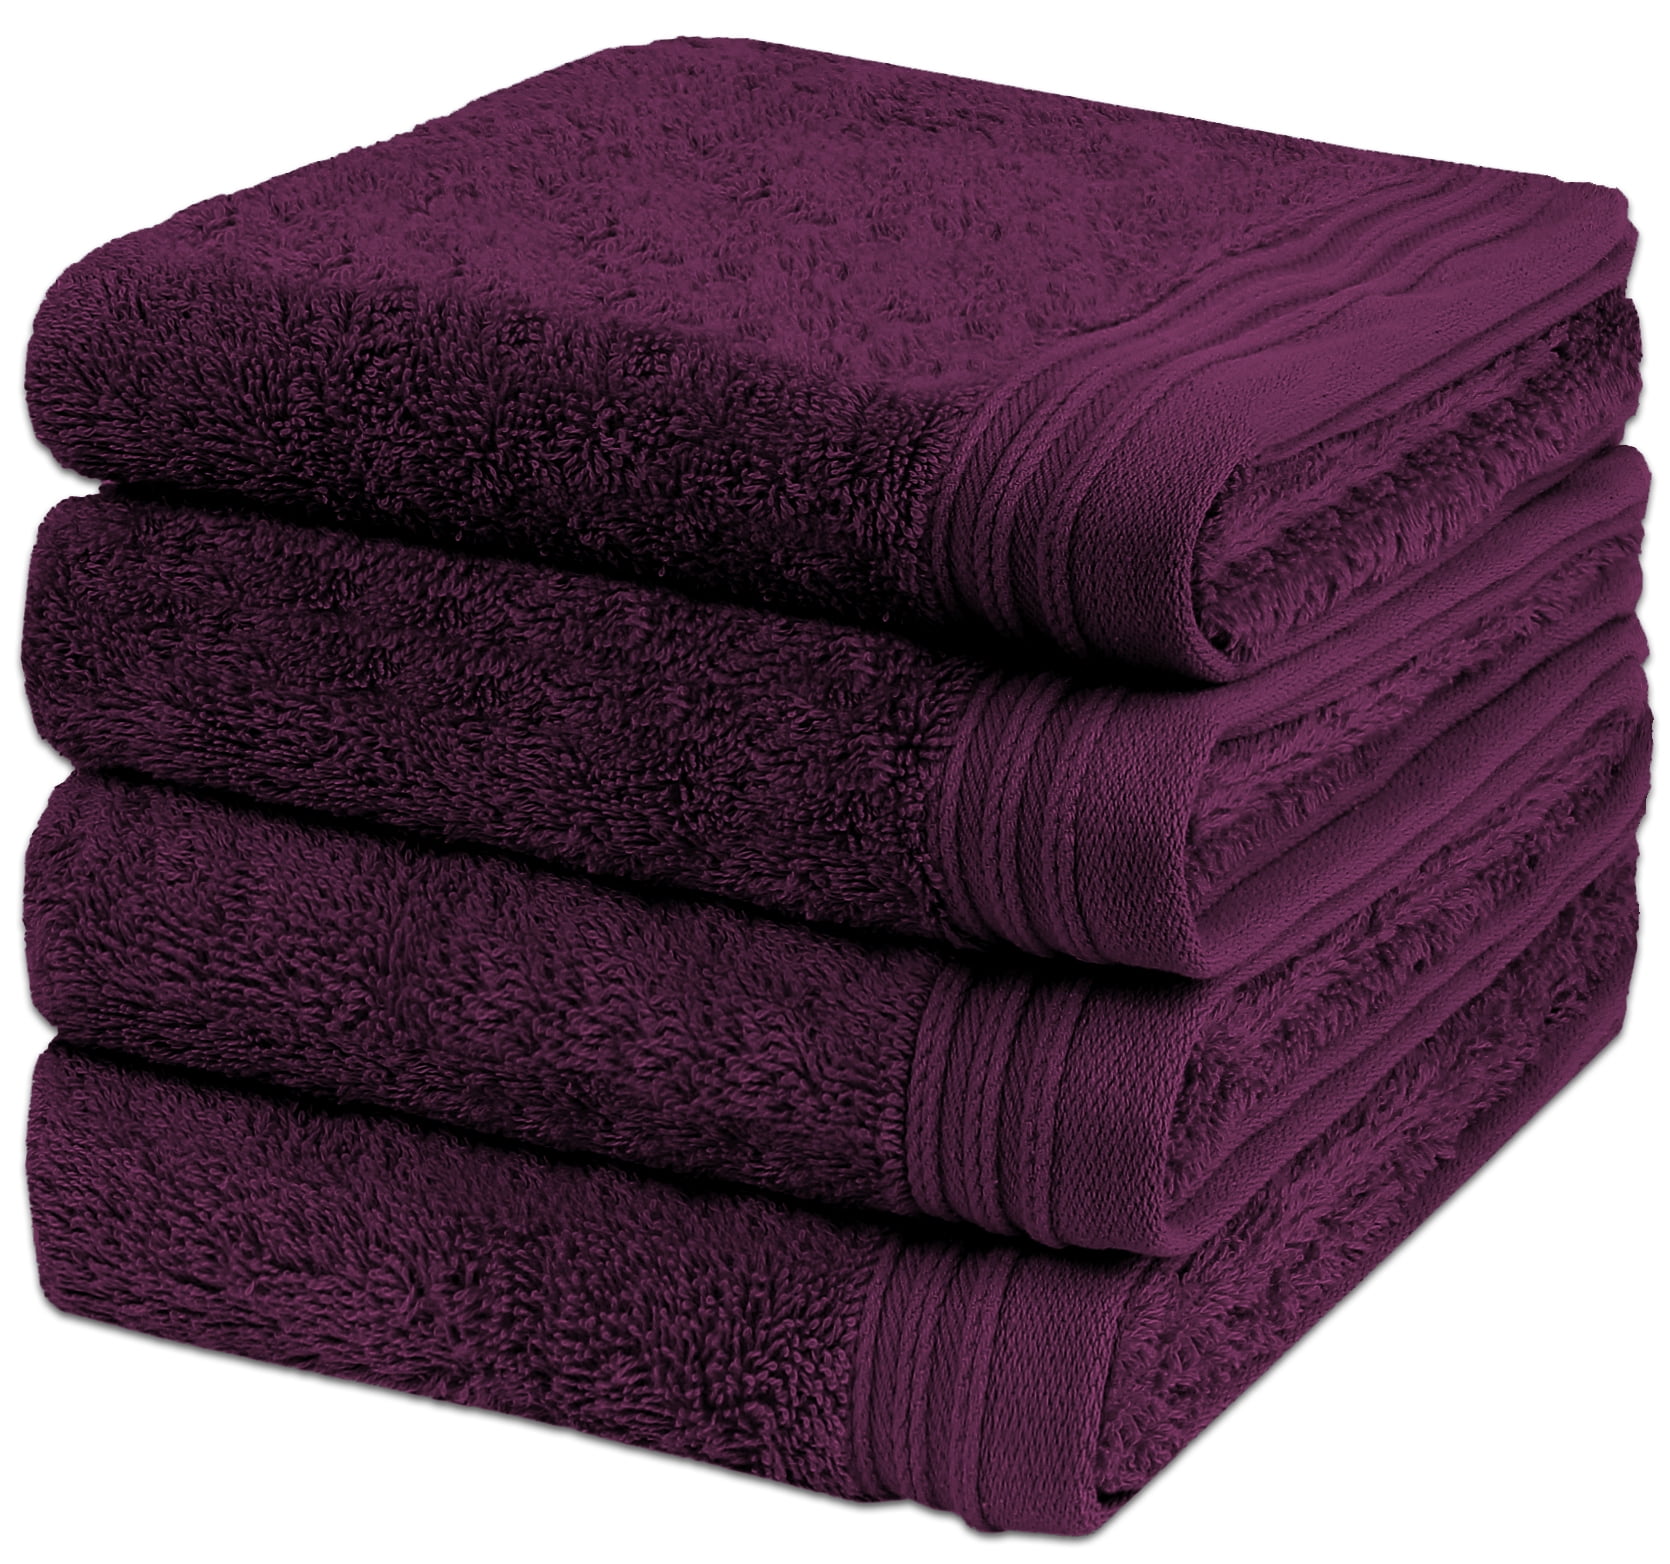 Premium 4 Pieces Towel Set including 4 exclusive Hand Towels 18